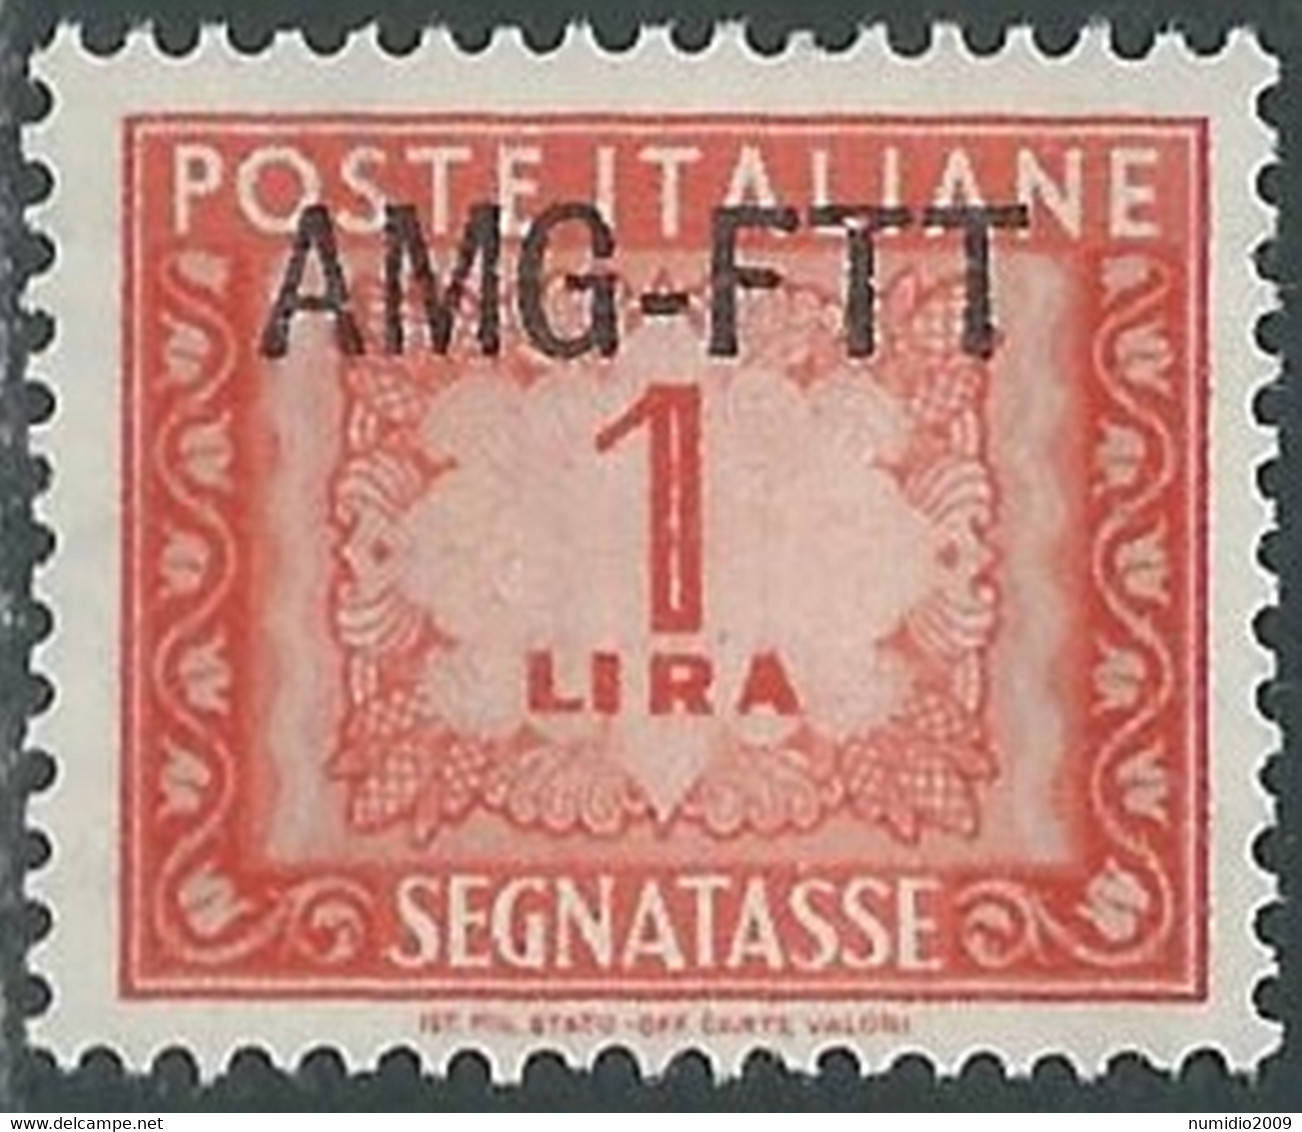 1949-54 TRIESTE A SEGNATASSE 1 LIRA MNH ** - RE10-8 - Postage Due